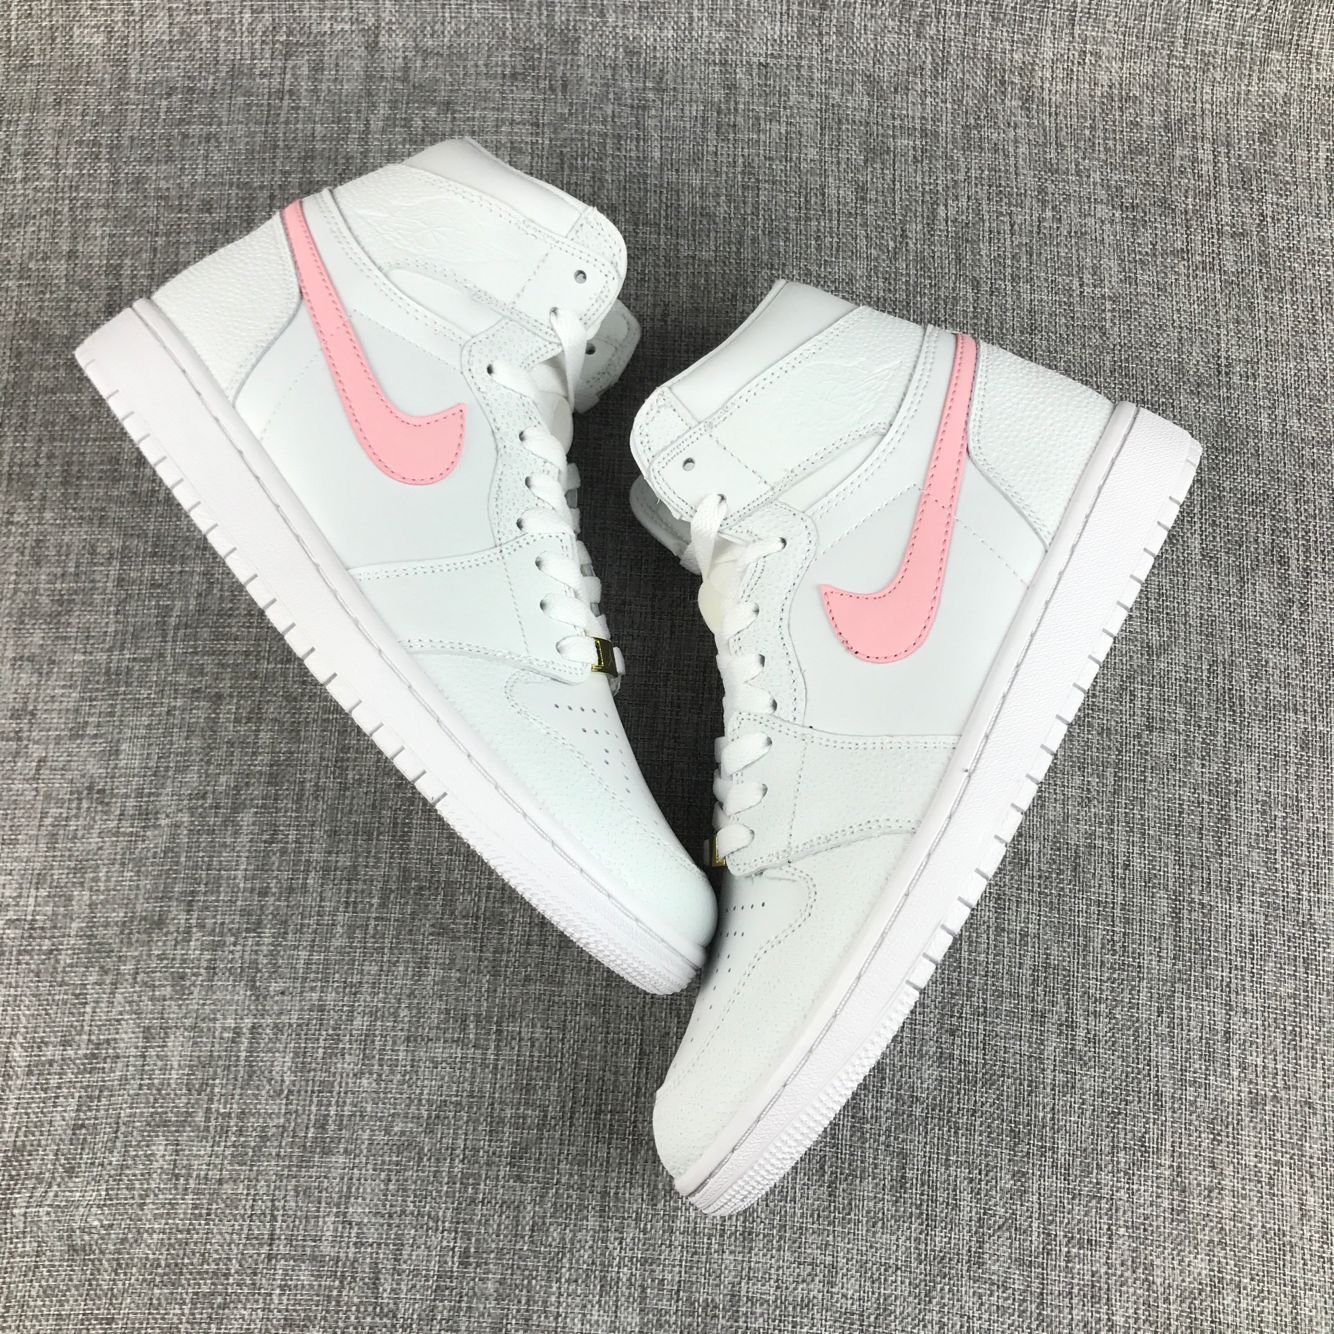 Latest Jordan 1 Retro White Pink Shoes